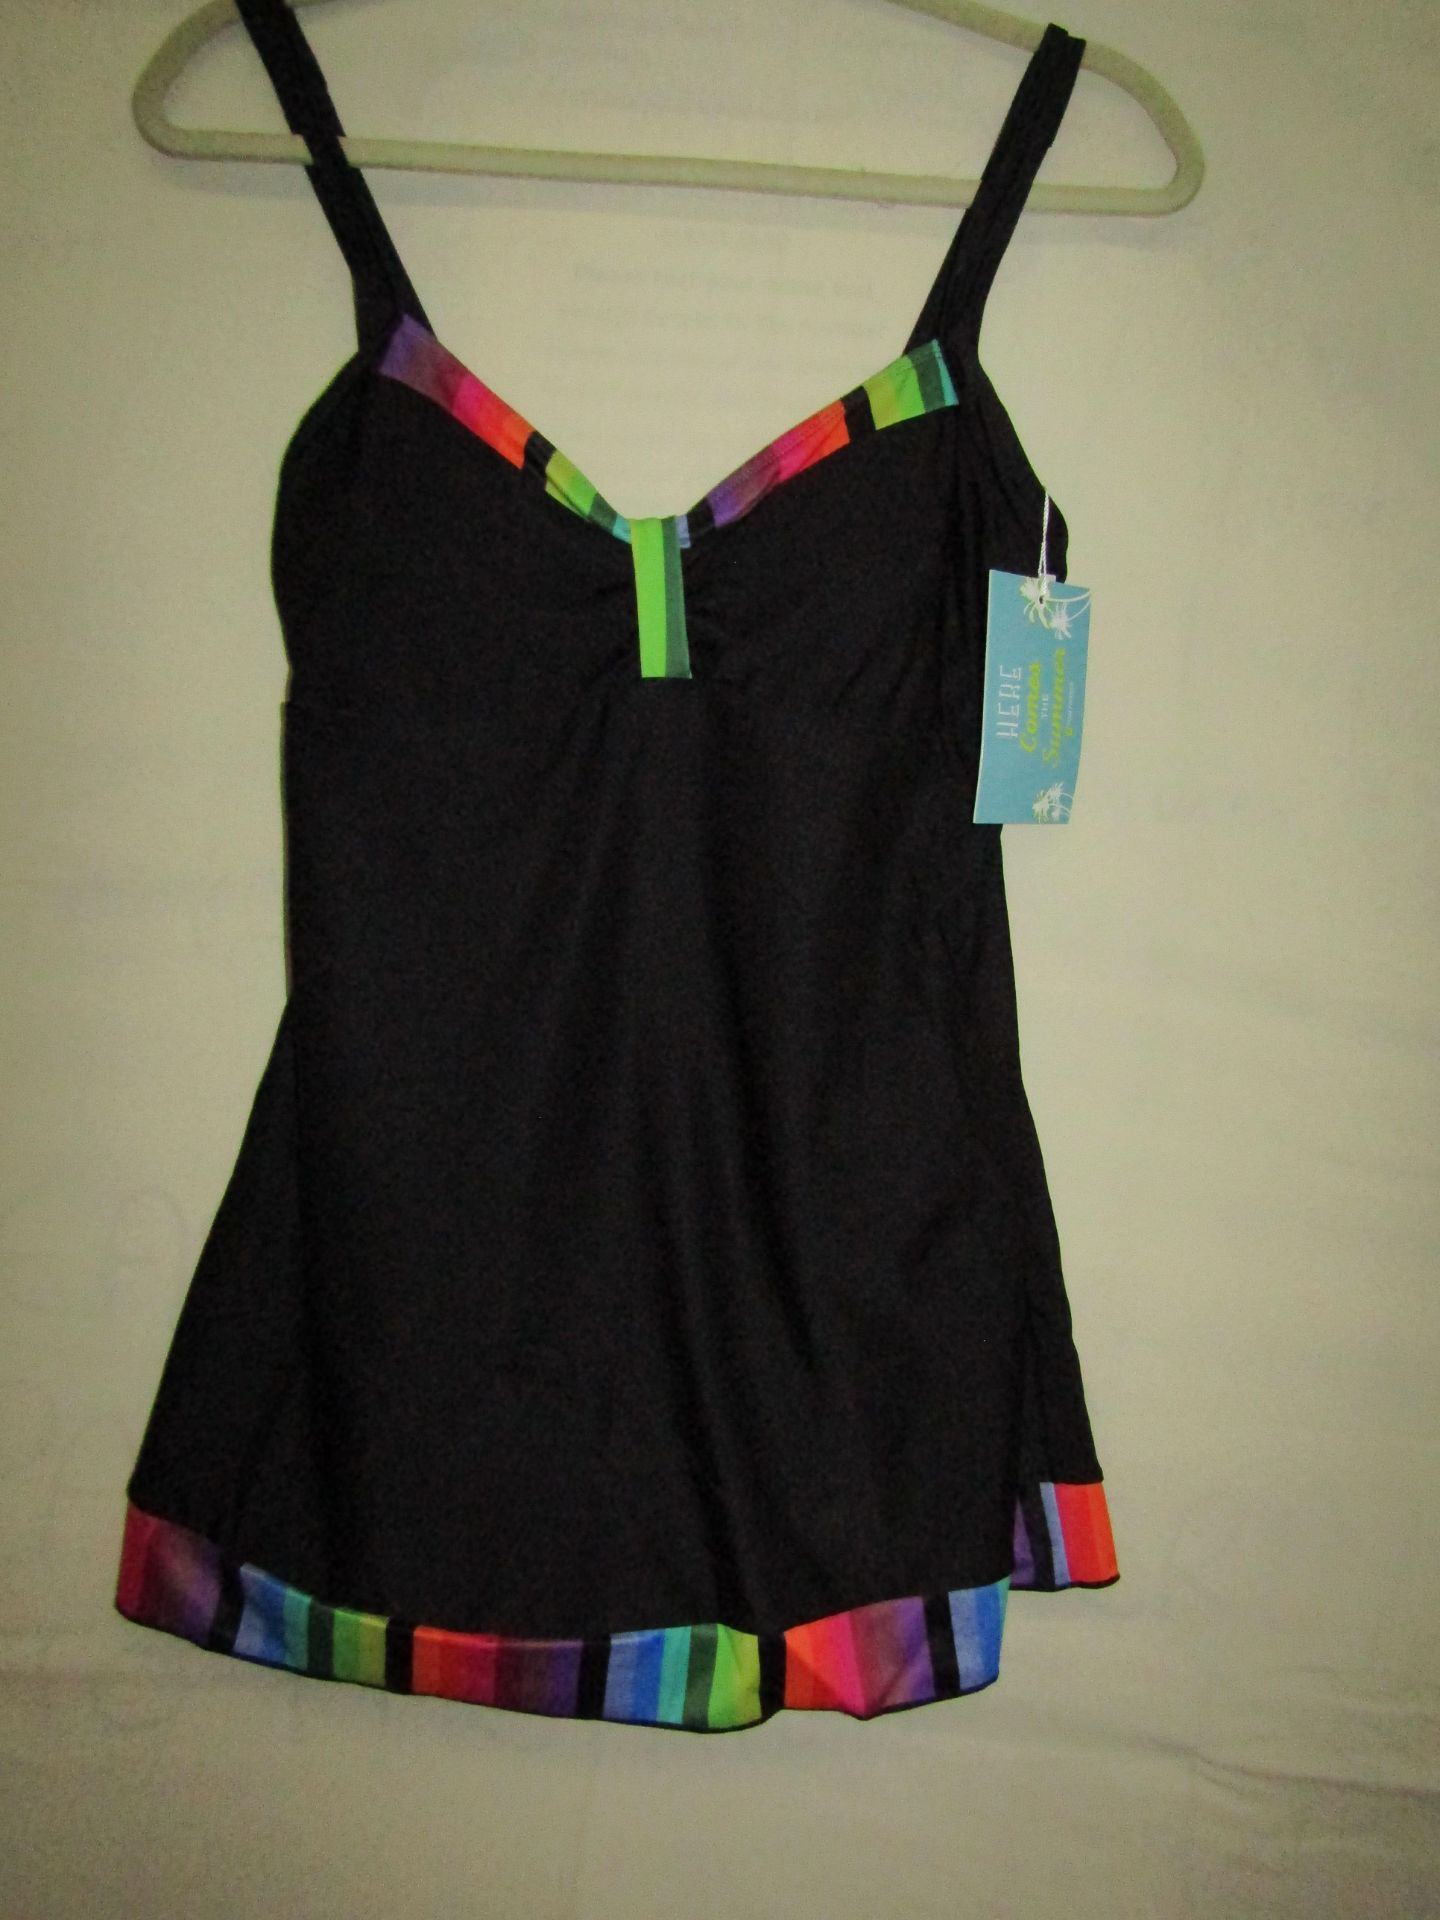 Ladies Swim/Dress With Printed Trim Black Size 10 New & Packaged